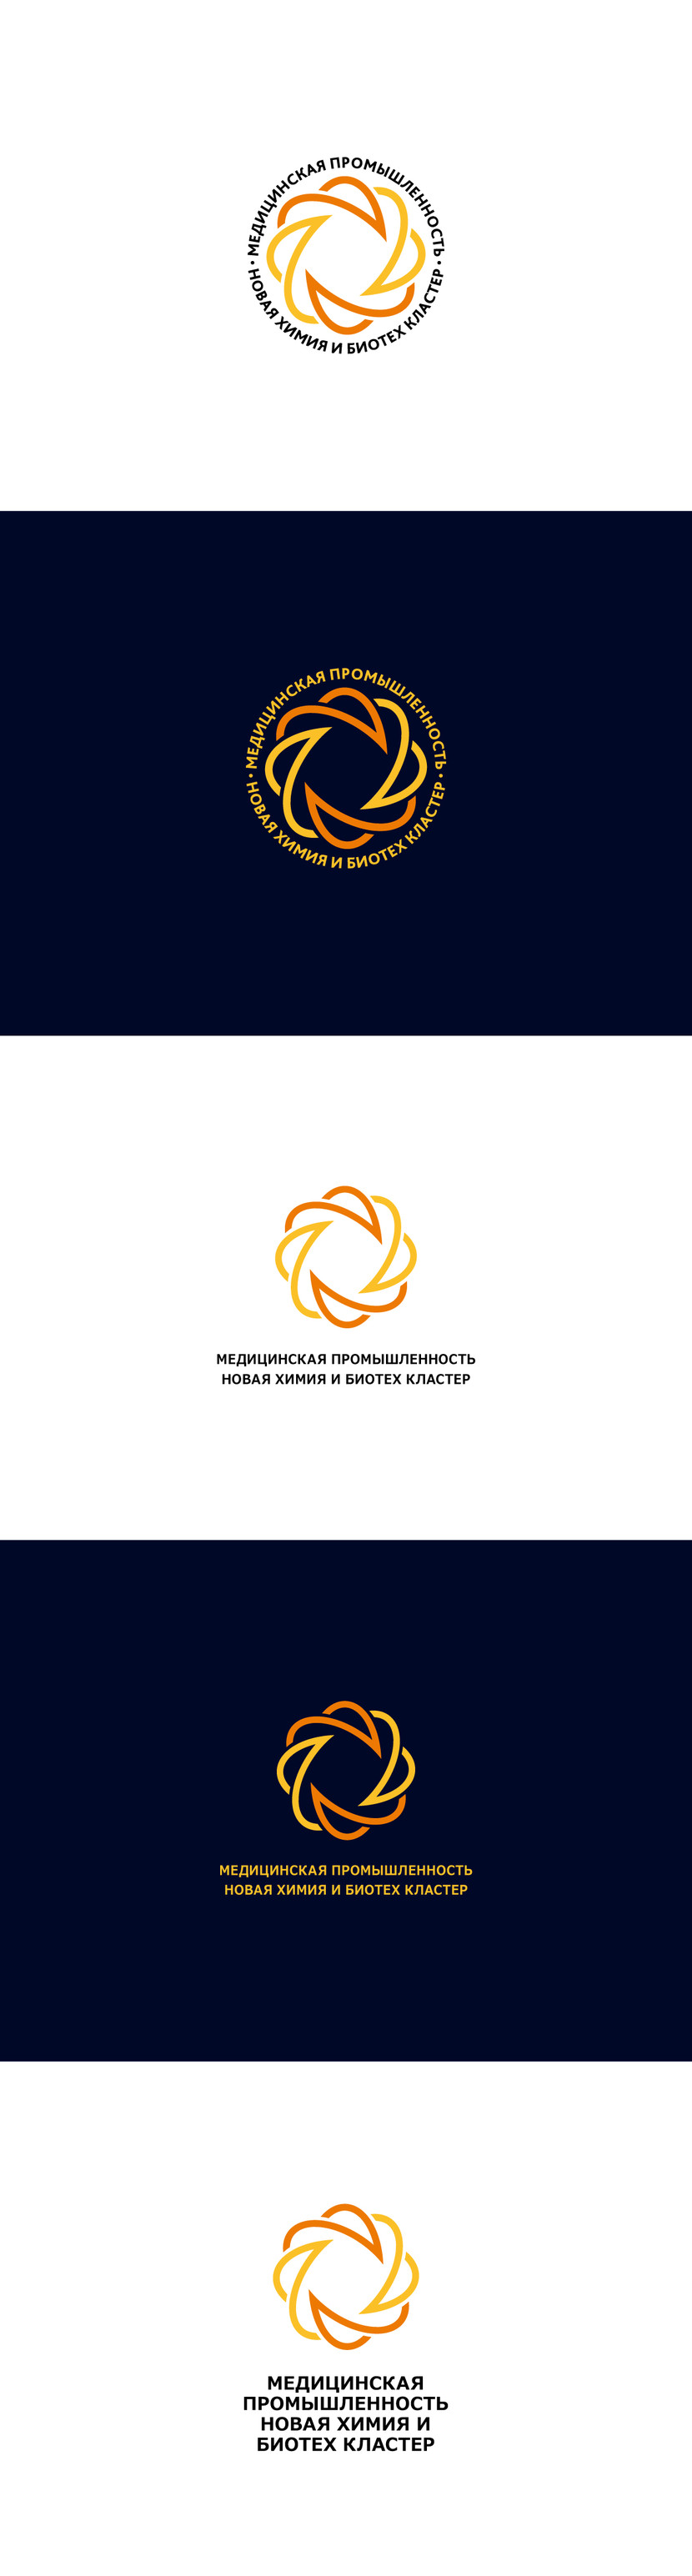 2 - Создание логотипа для ХимБиоМед кластера